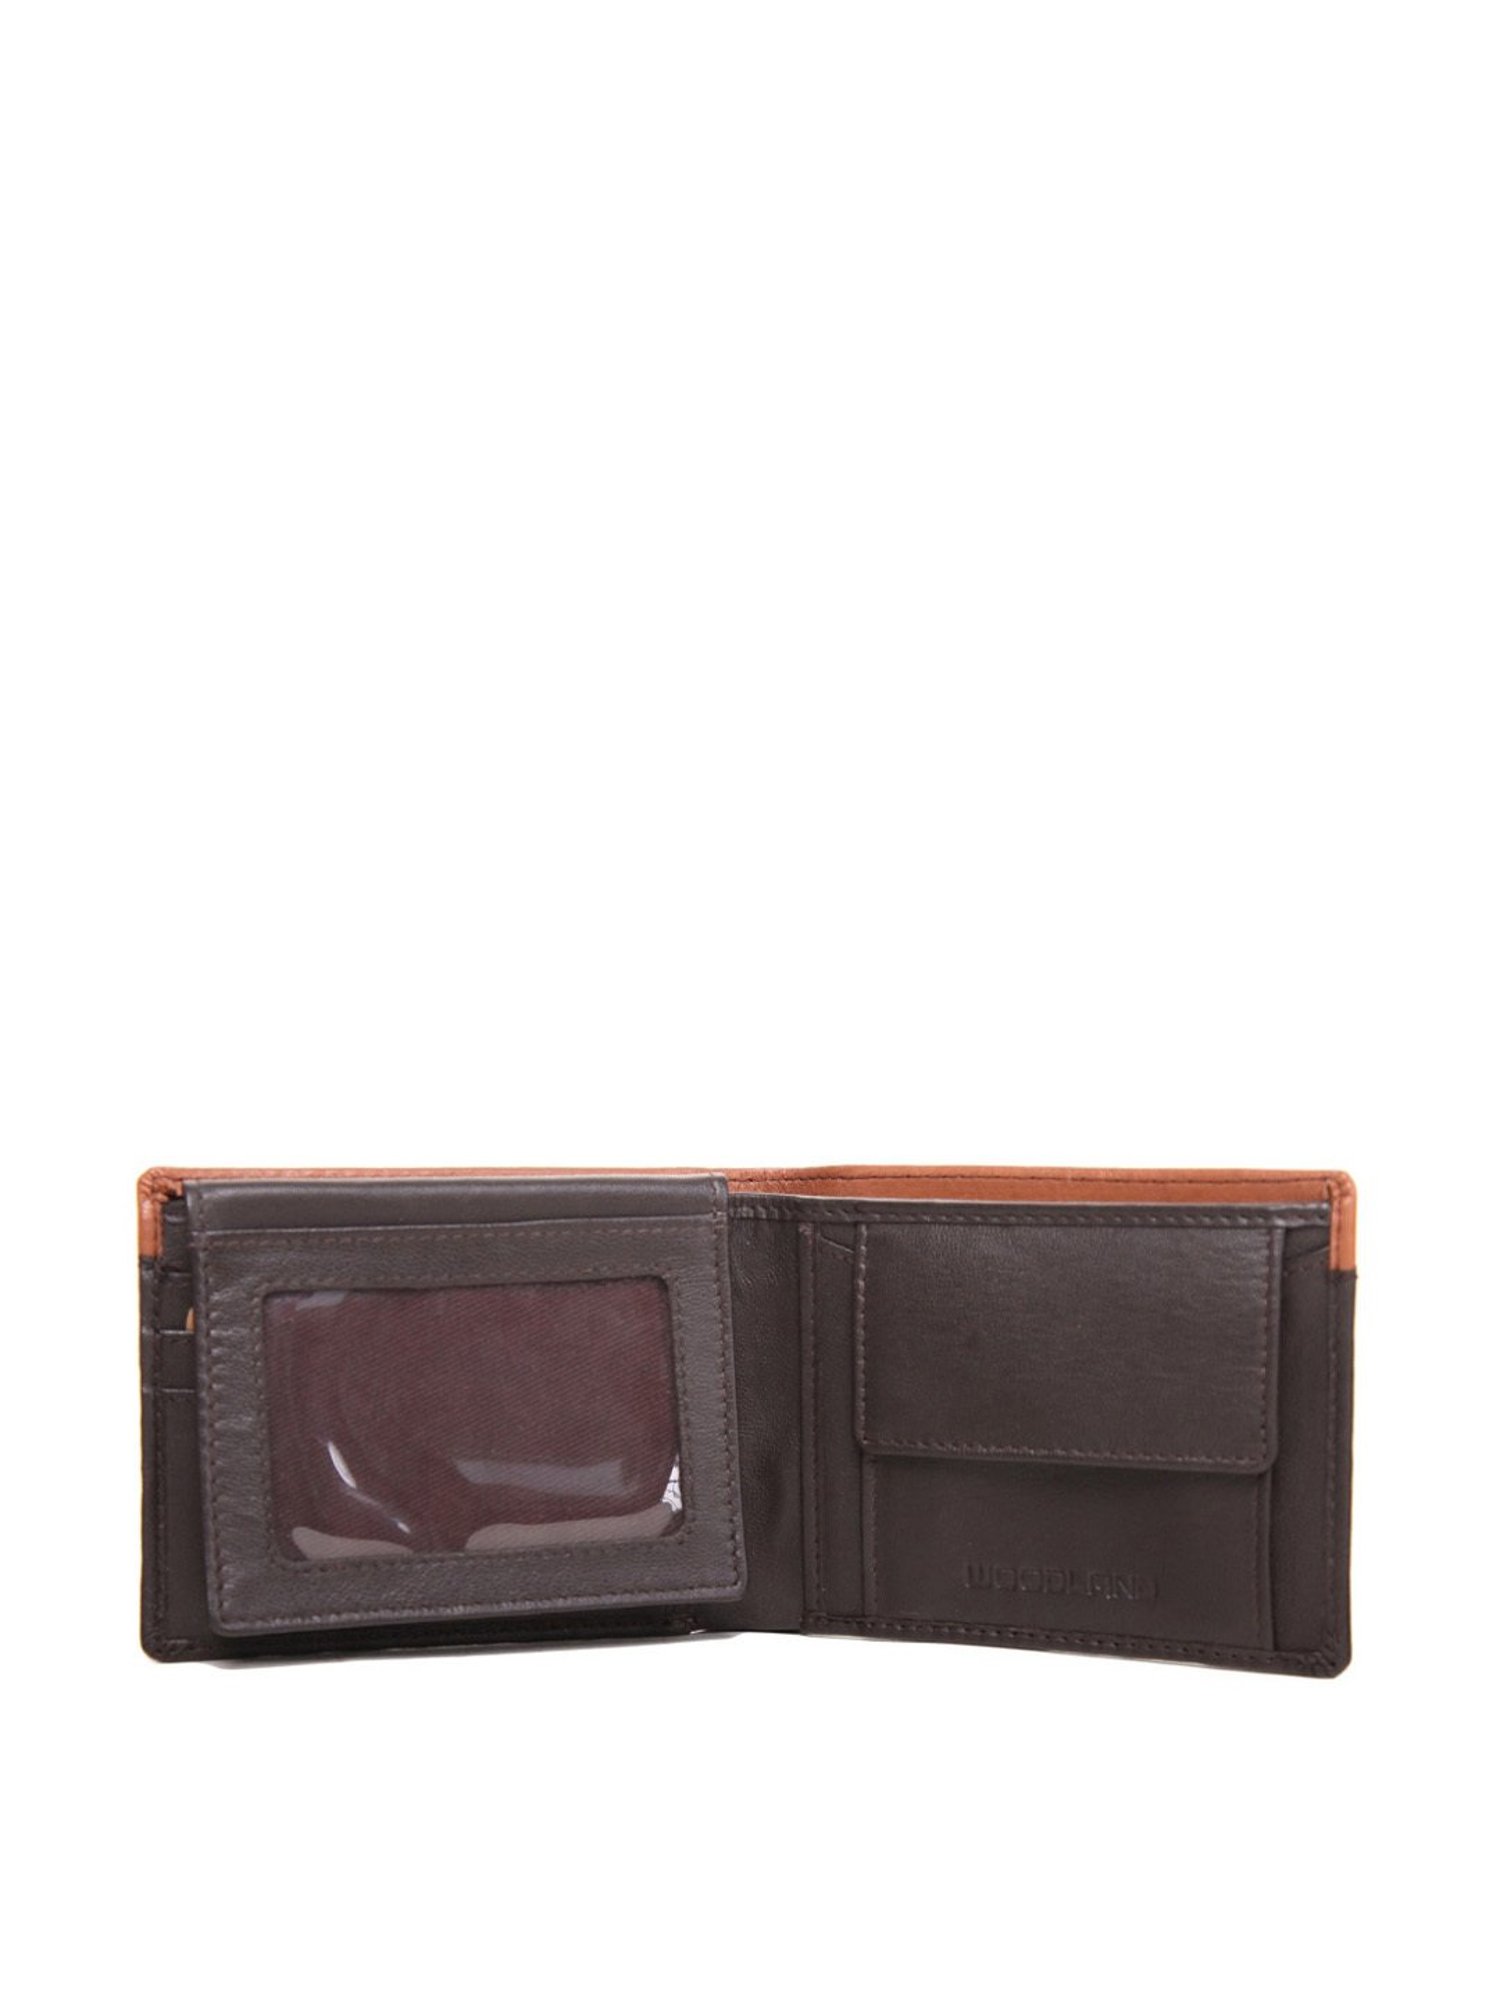 No. 03 Wallet // Woodland - Bexar Goods Co.